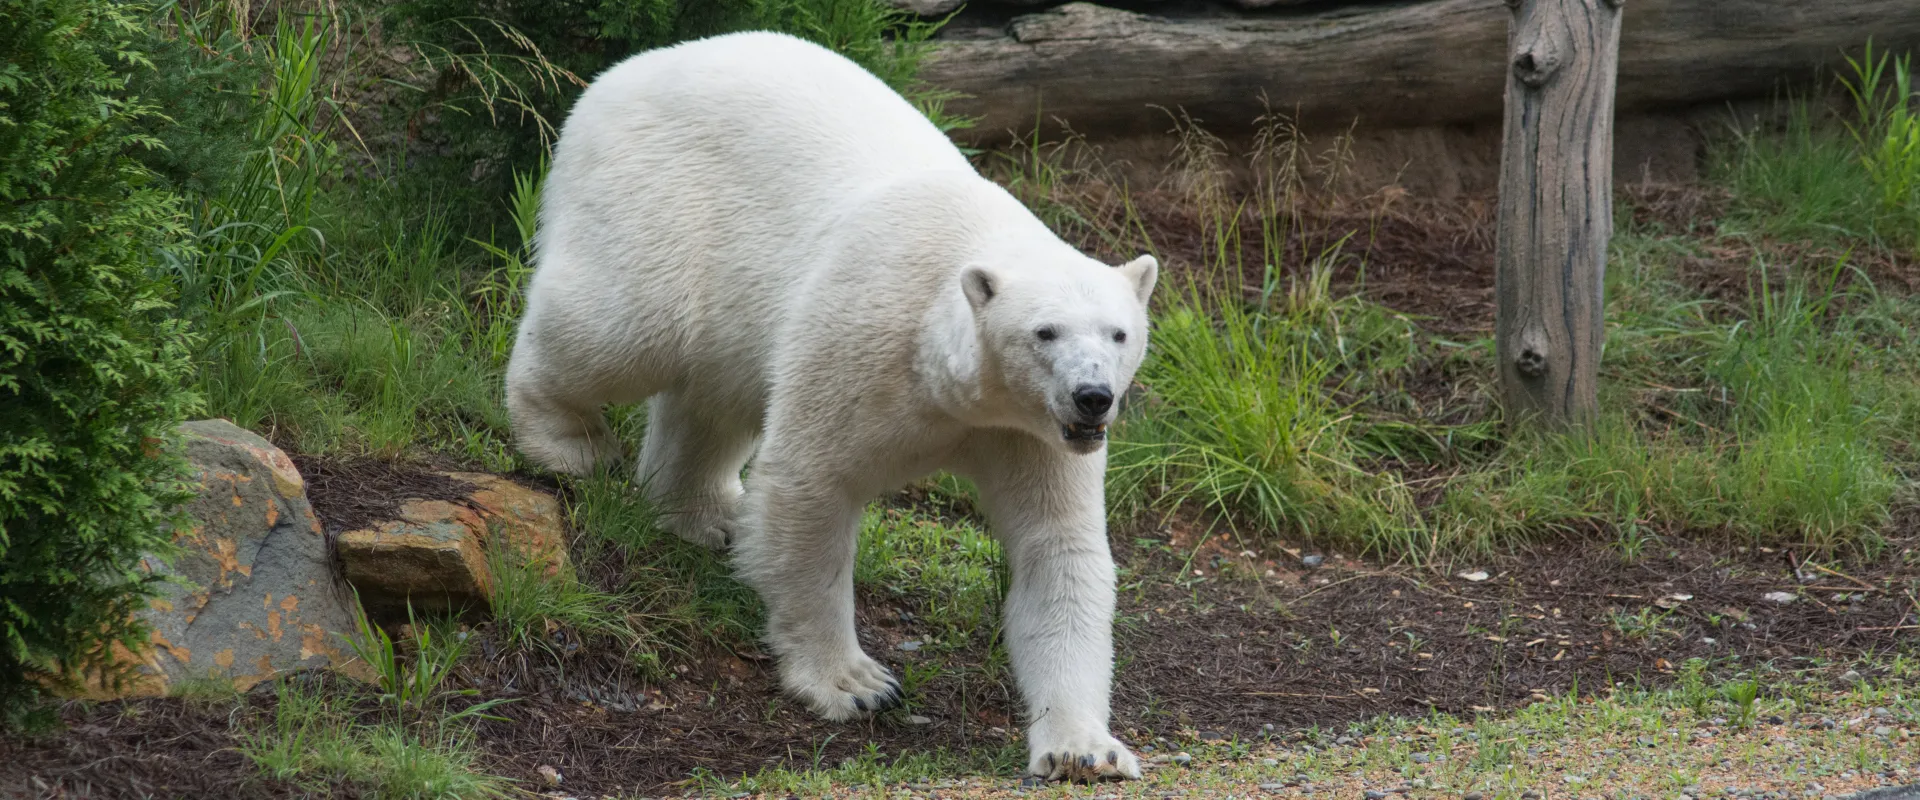 Payton's New Place - North Carolina Zoo Welcomes New Polar Bear